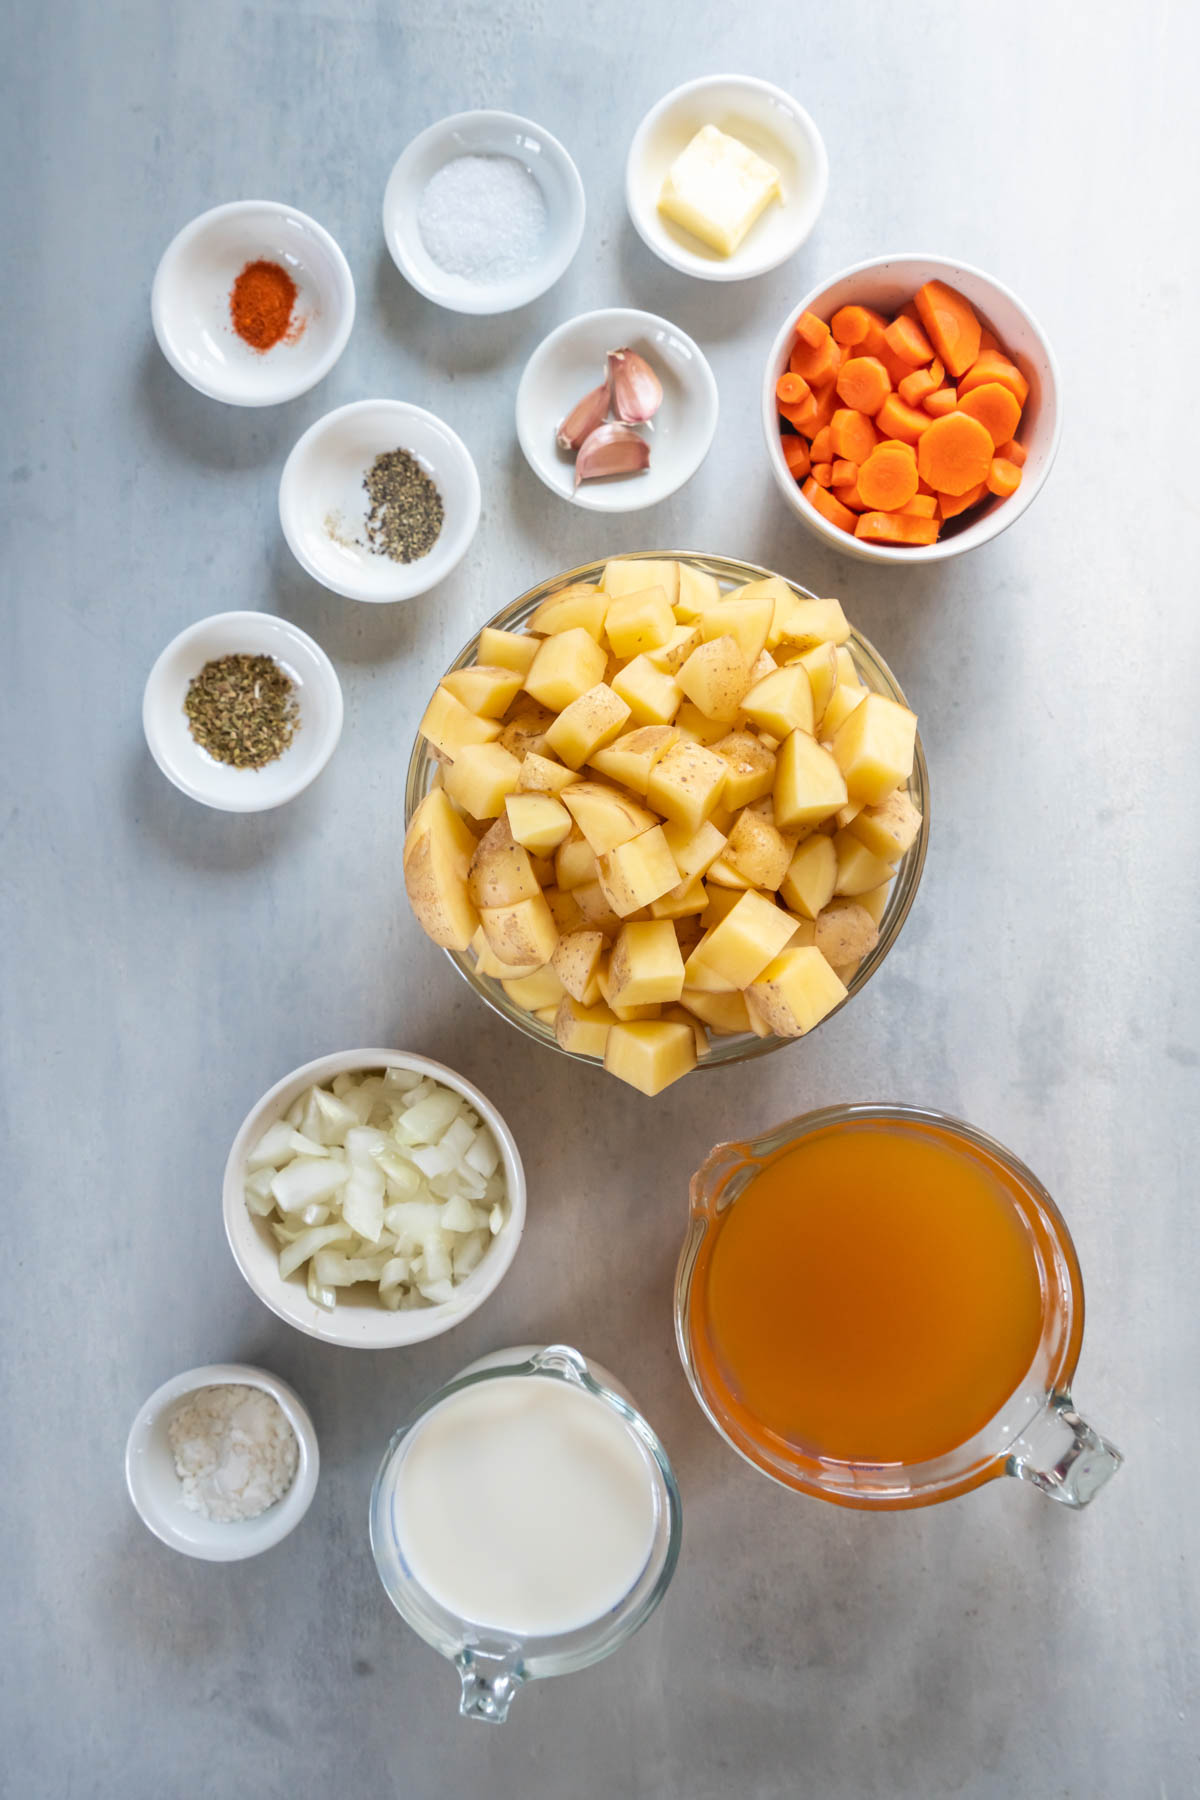 Ingredients for Instant Pot potato soup recipe.